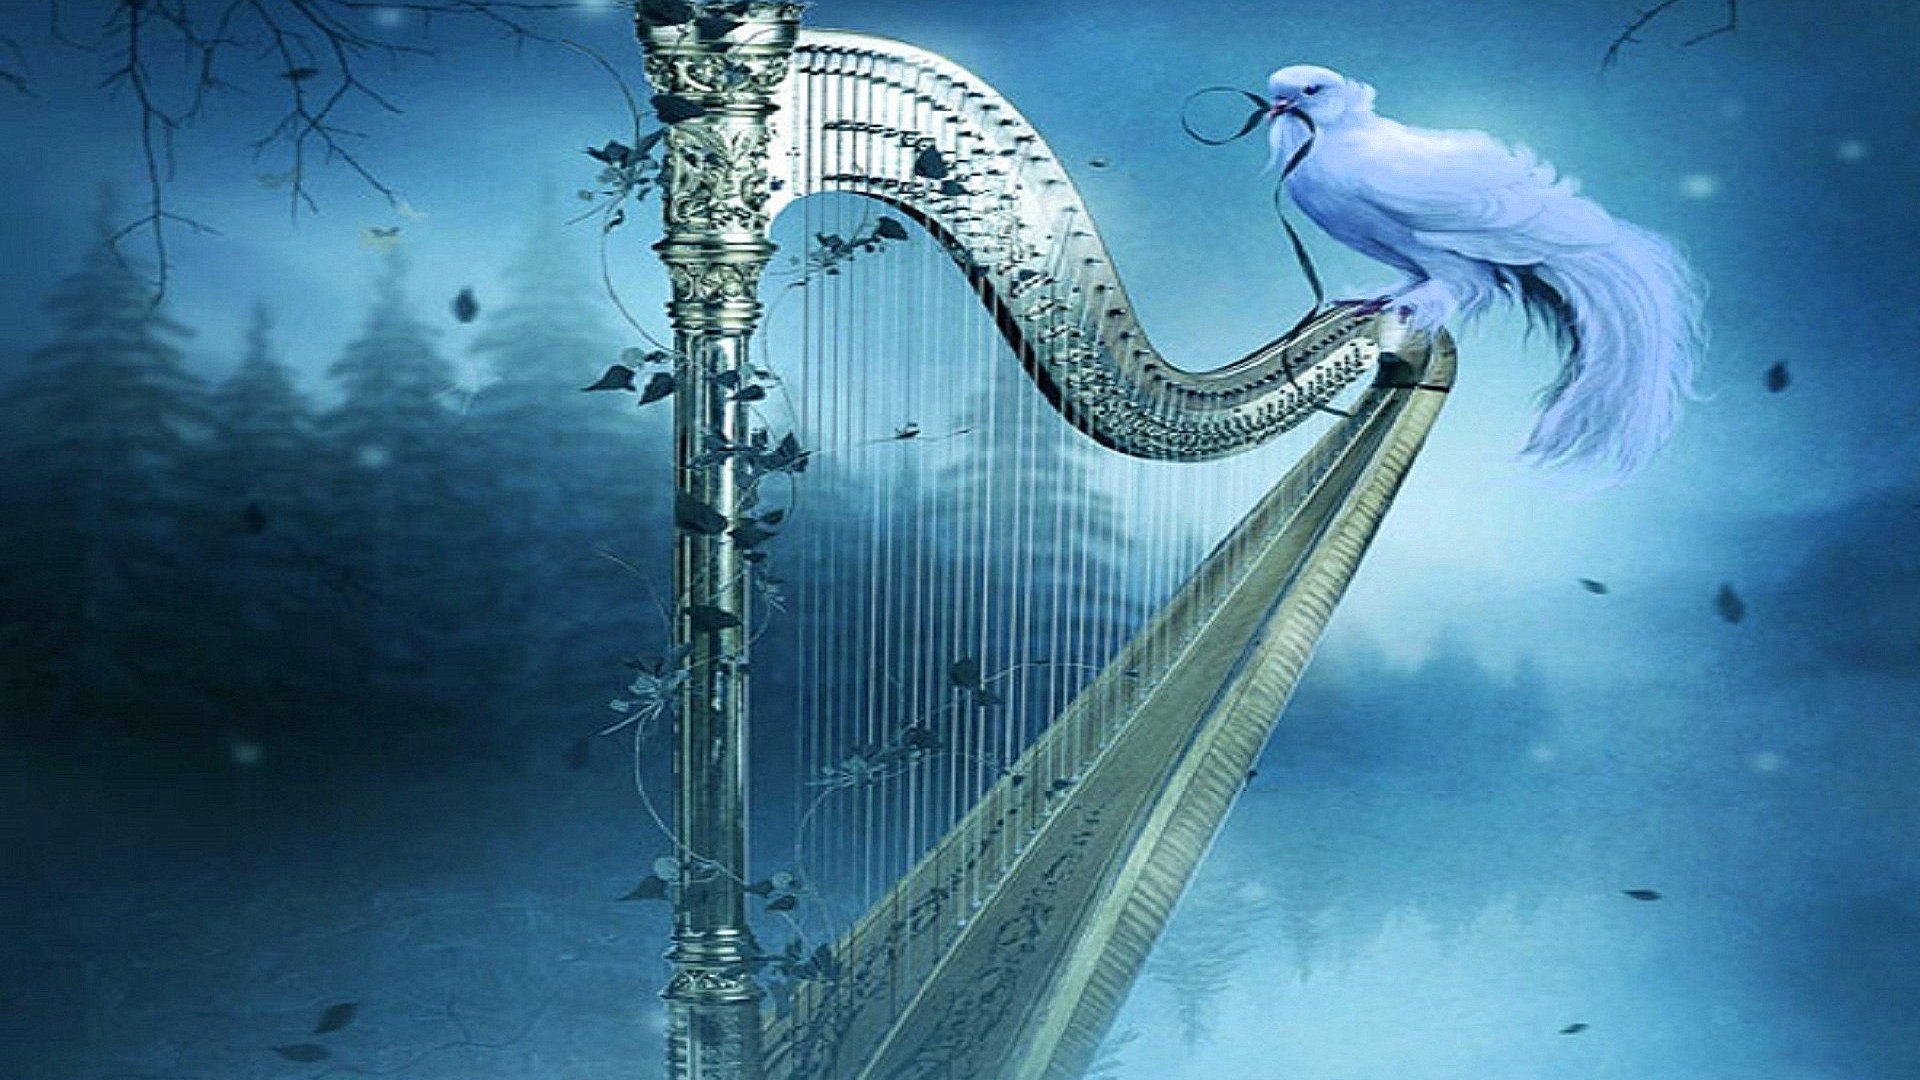 artistic, fantasy, bird, blue, harp, leaf